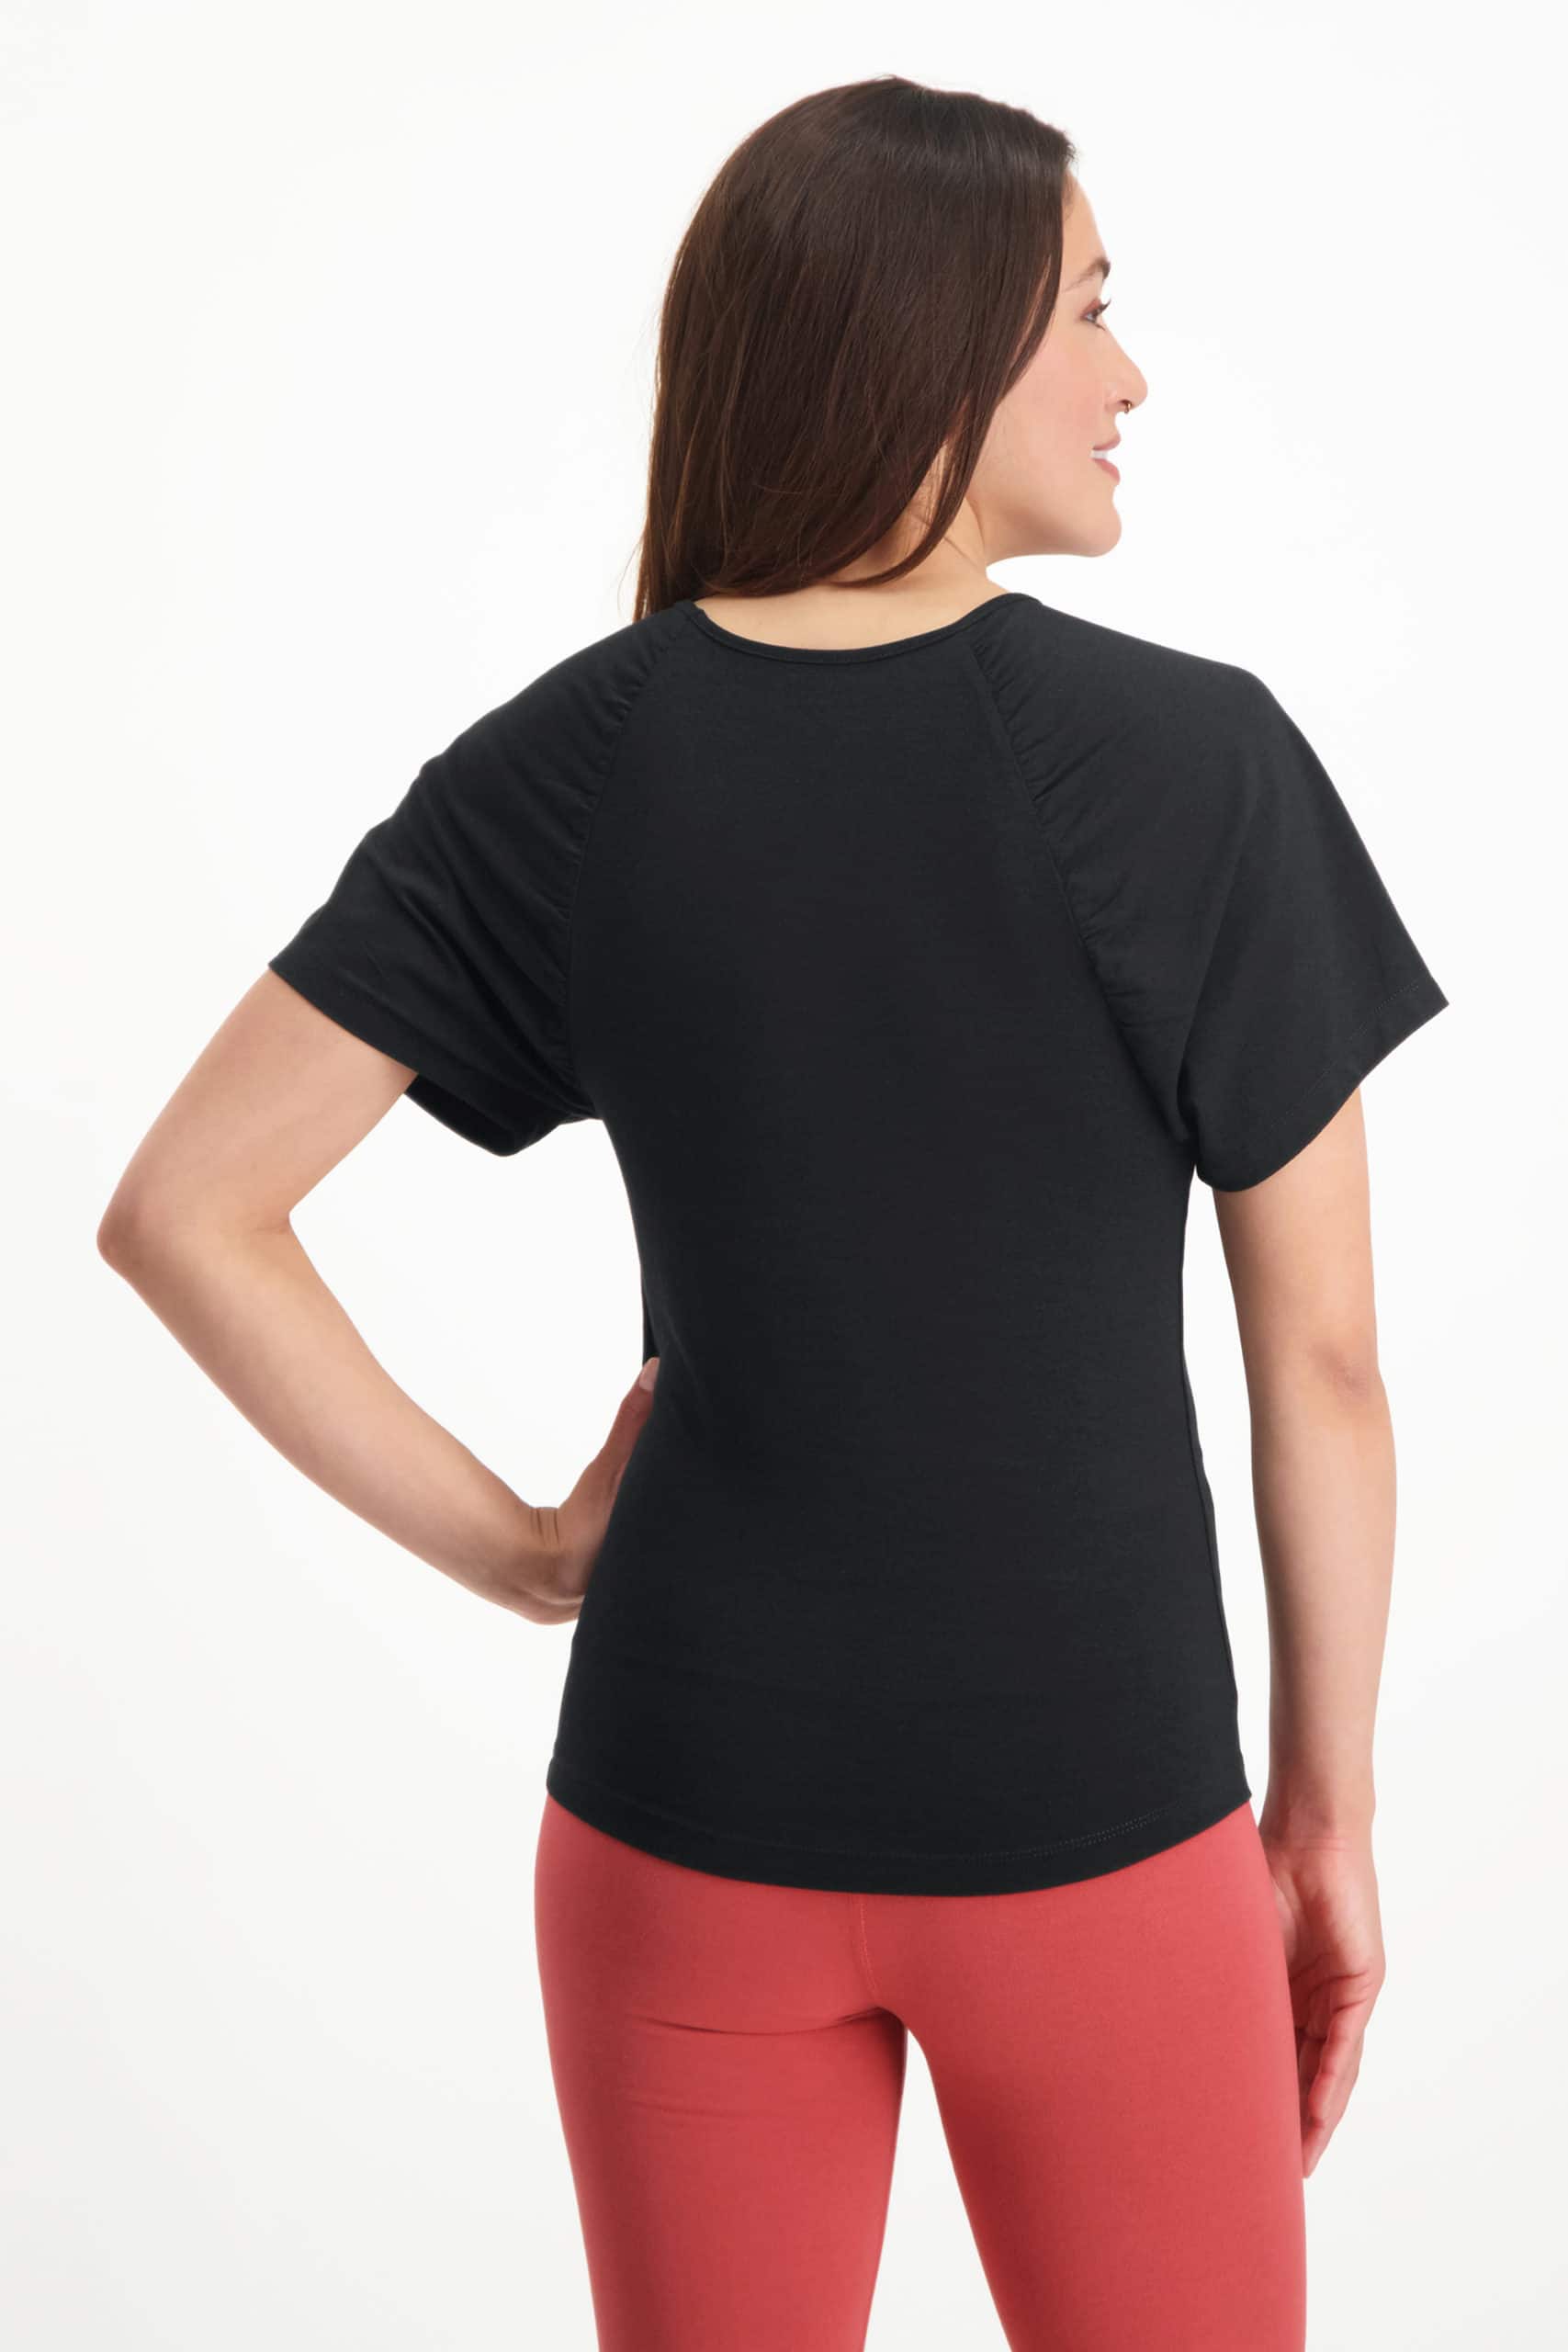 Bamboo yoga shirt Chandra - Urban Black-back-model